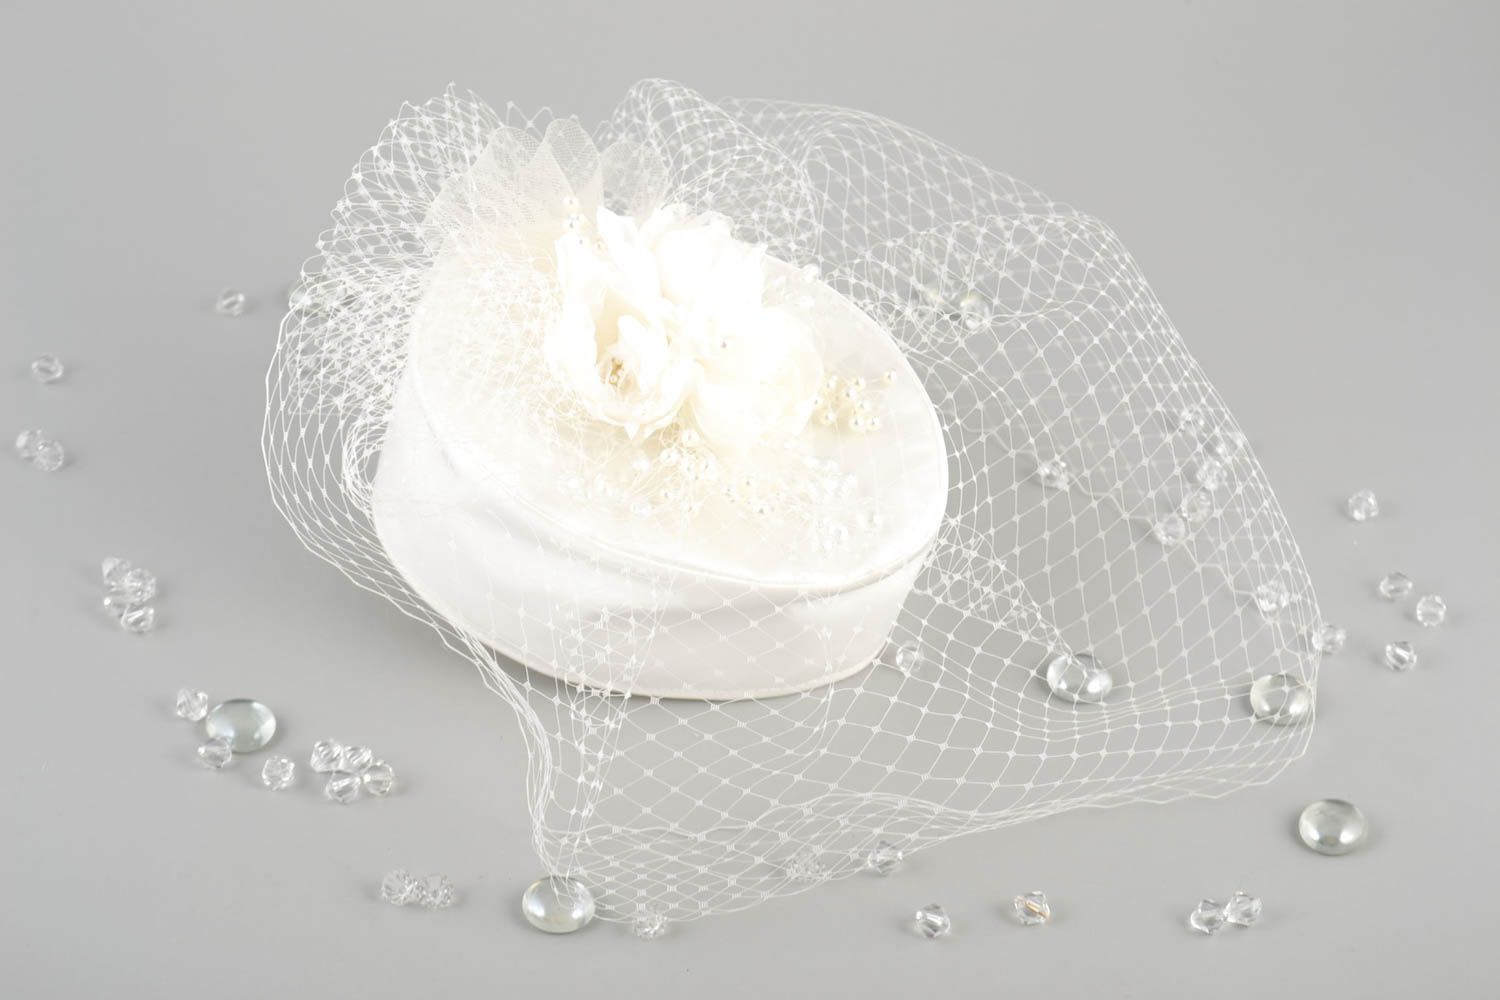 Bride accessory wedding head accessory wedding hat unusual hat for bride photo 1